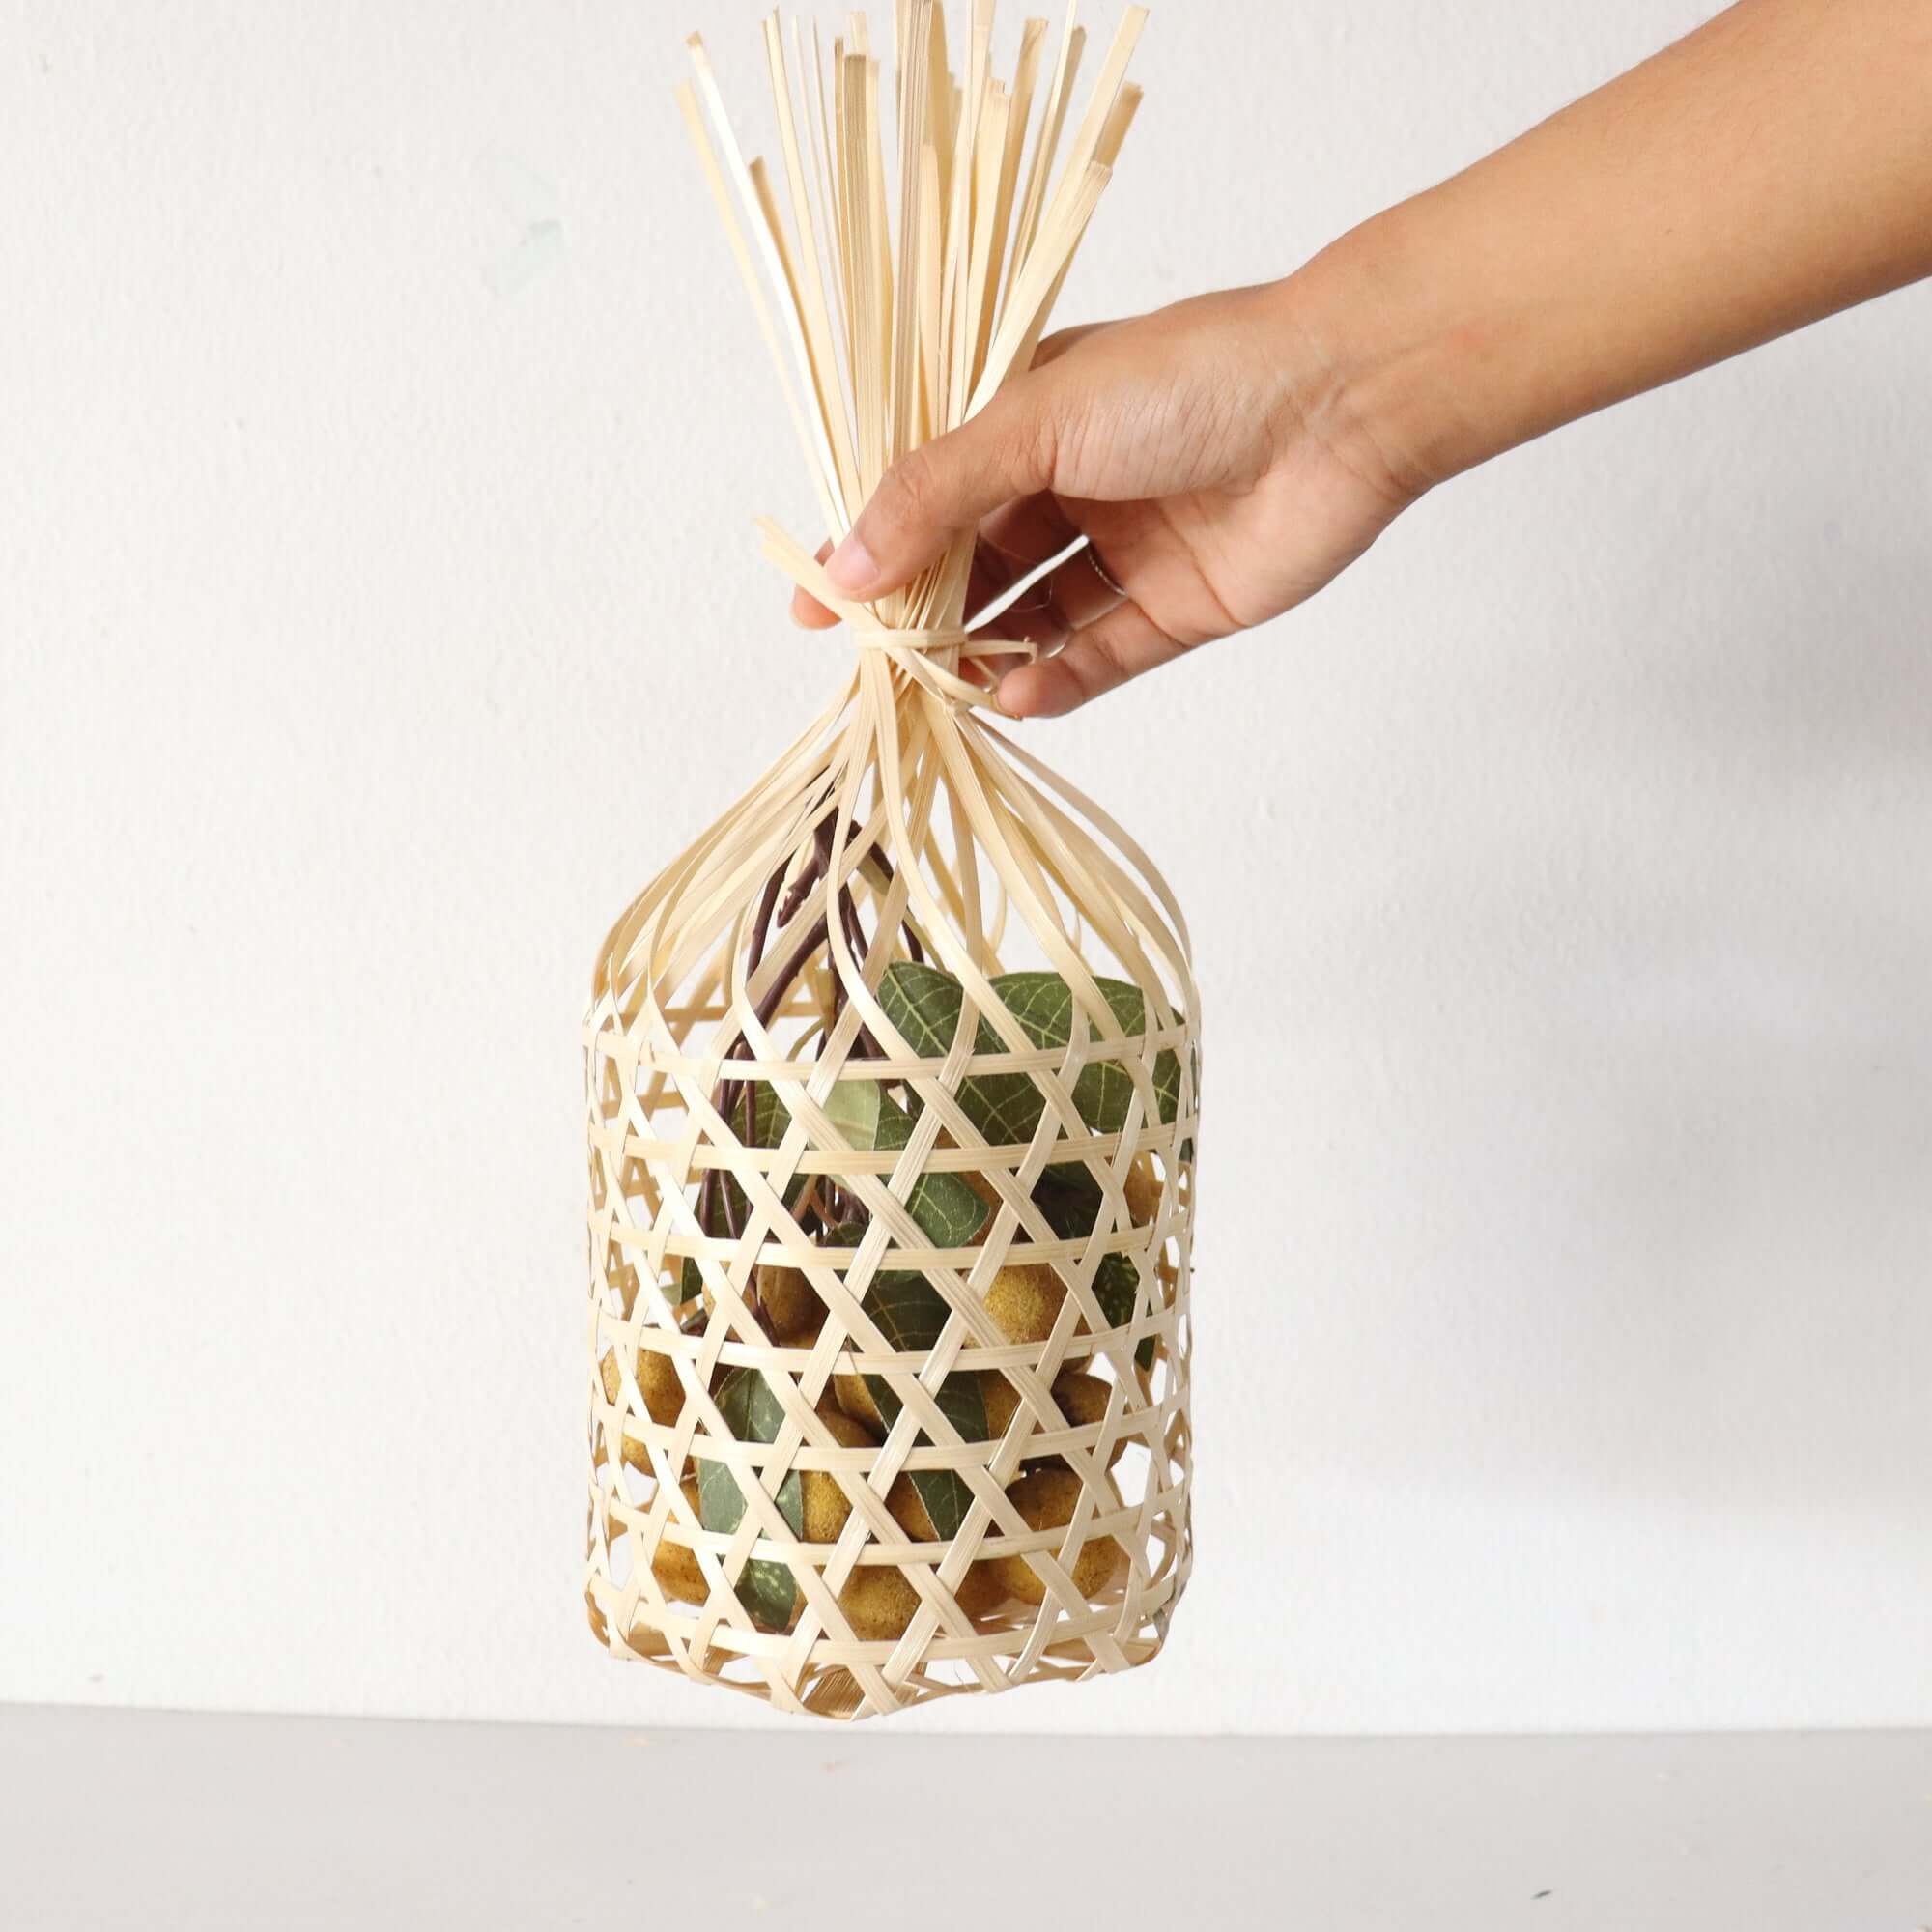 CHALOM - Bamboo Basket 10 pcs. per Pack